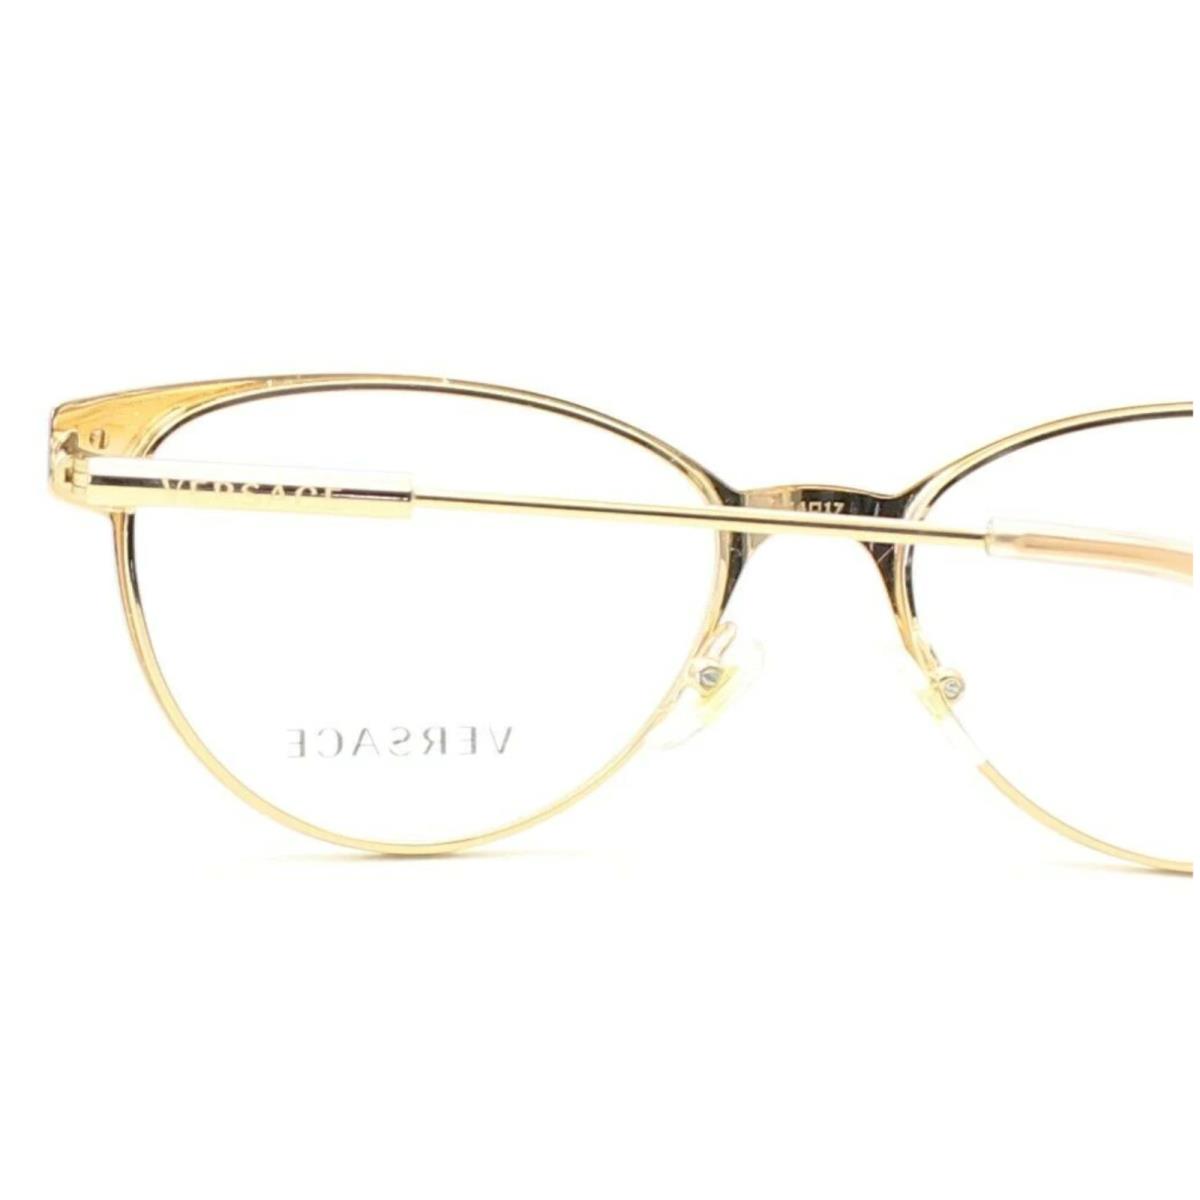 Versace Rx-able Cat Eye Eyeglasses Mod 1277 1412 54-17 140 Rose Gold Frames - Rose Gold, Frame: Rose Gold, Lens: